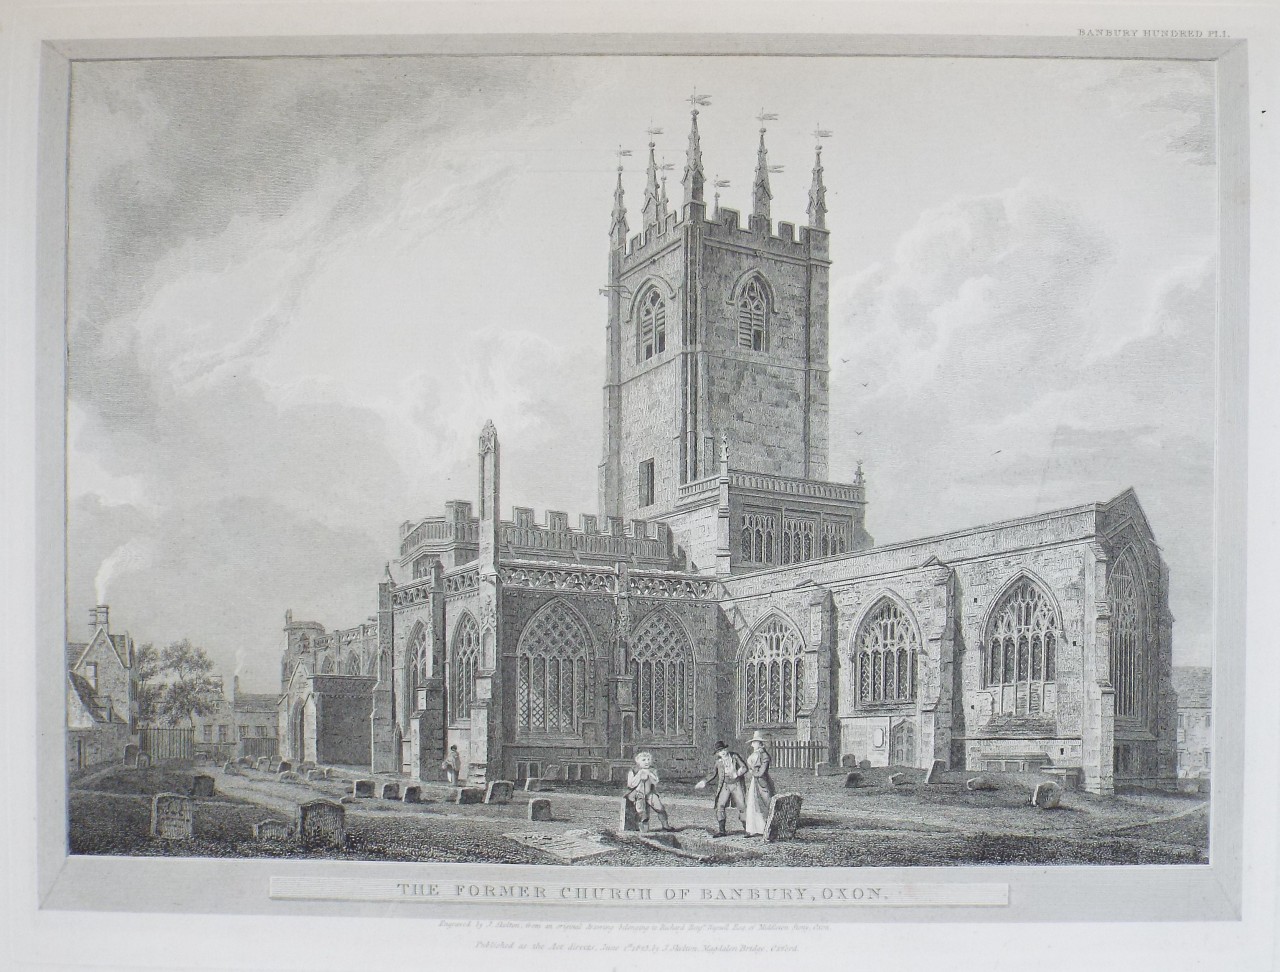 Print - The Former Church of Banbury, Oxon. - Skelton